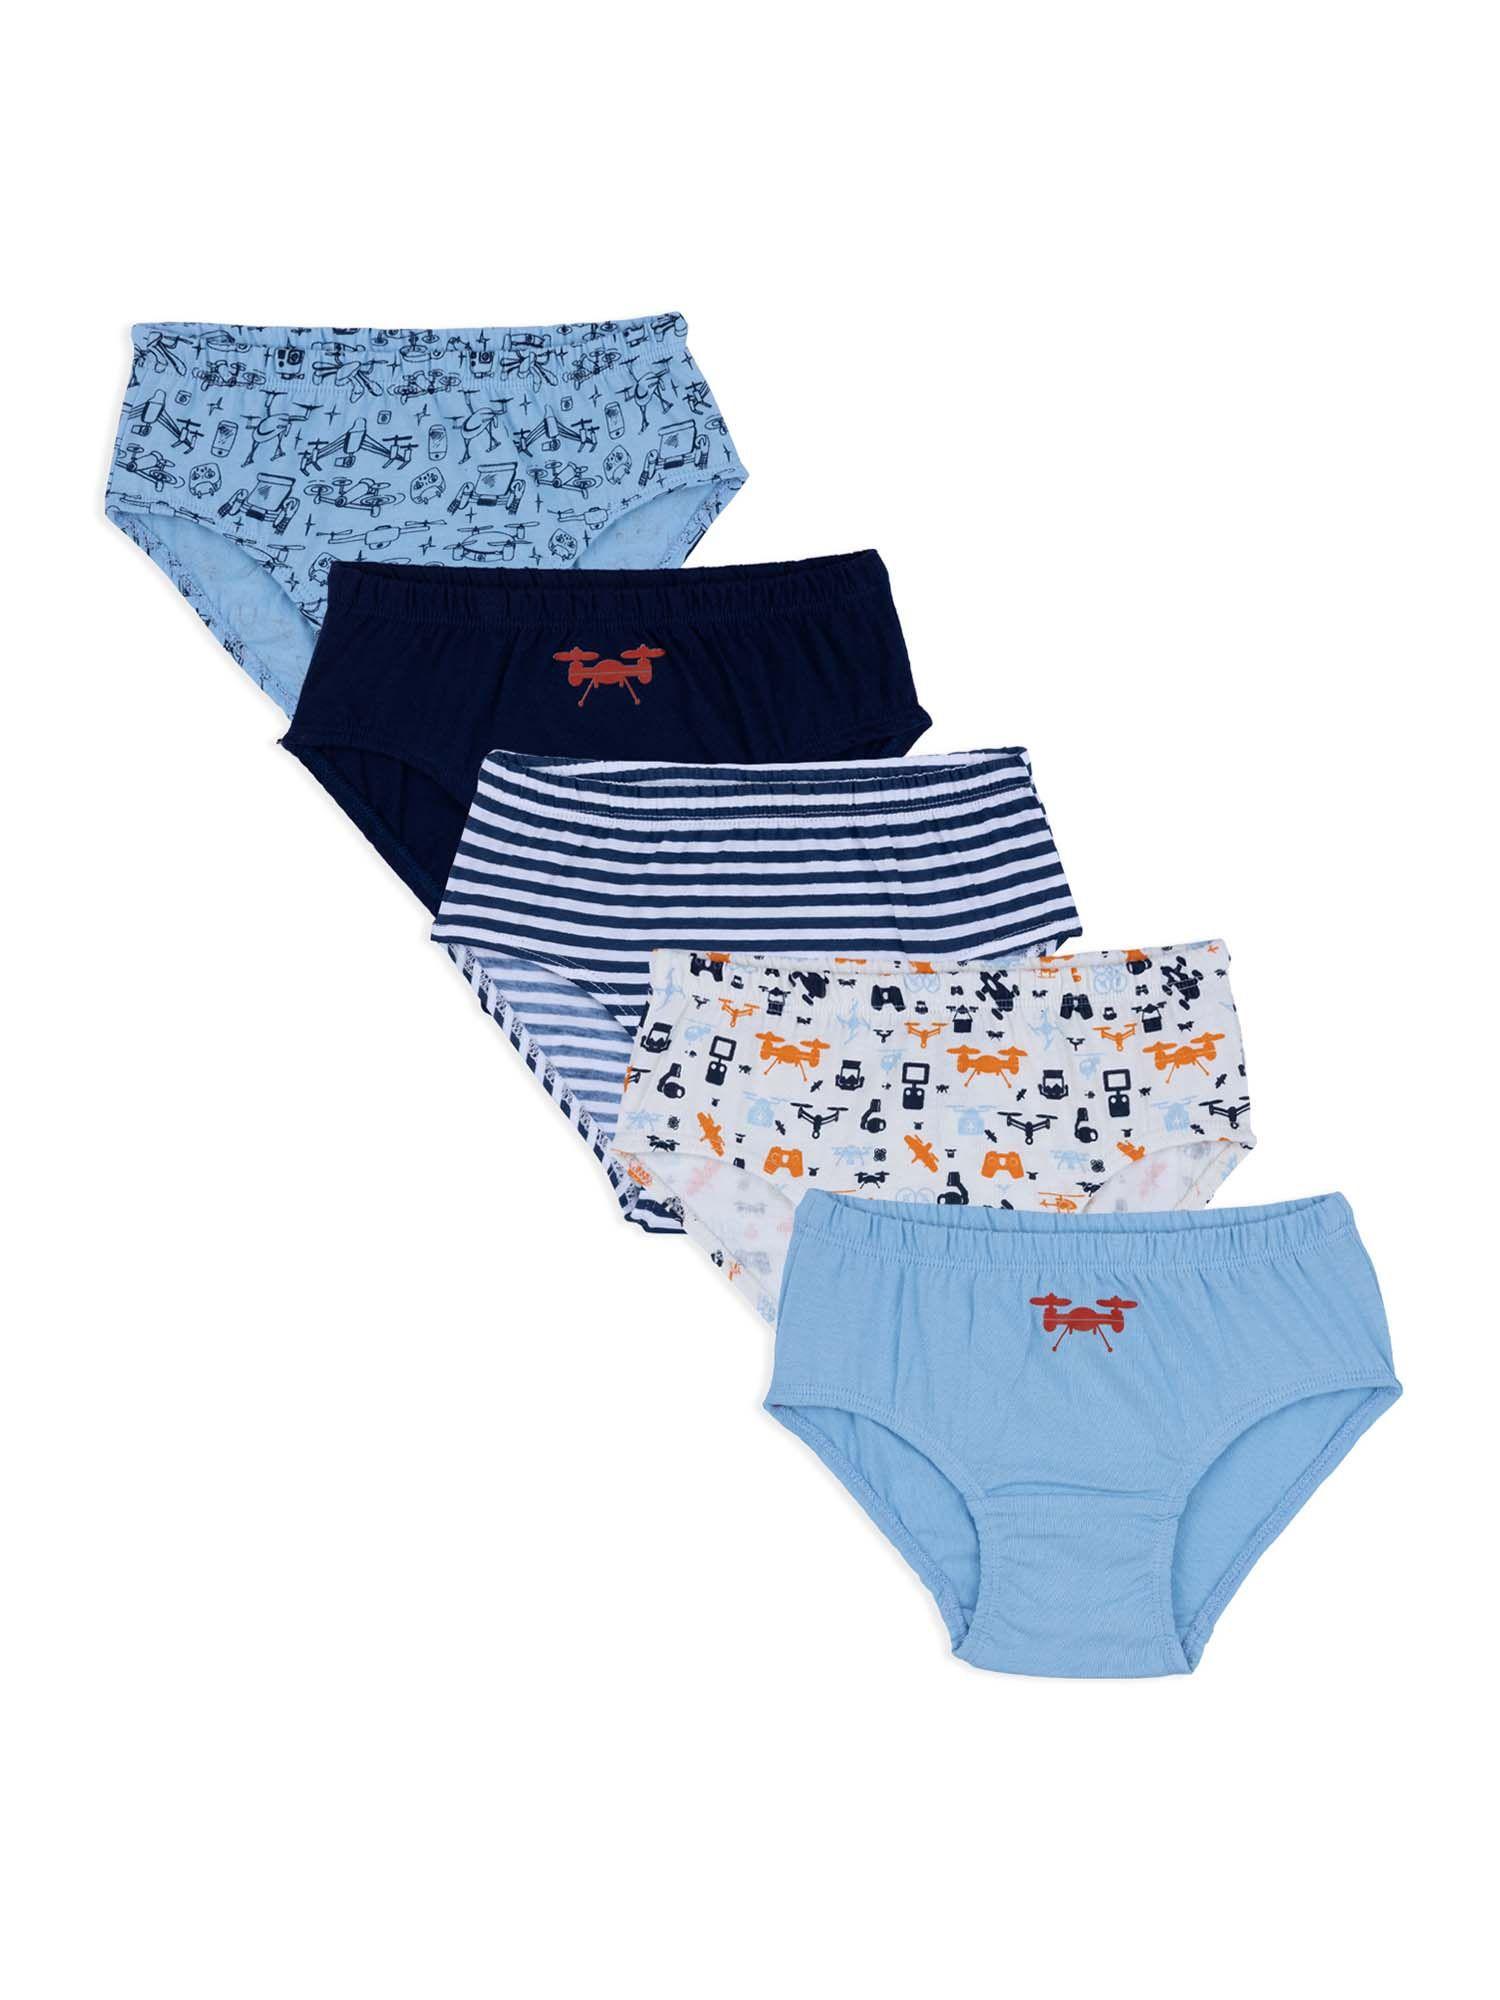 boys-cotton-graphic-printed-brief-underwear-innerwear-multicolor-(pack-of-5)